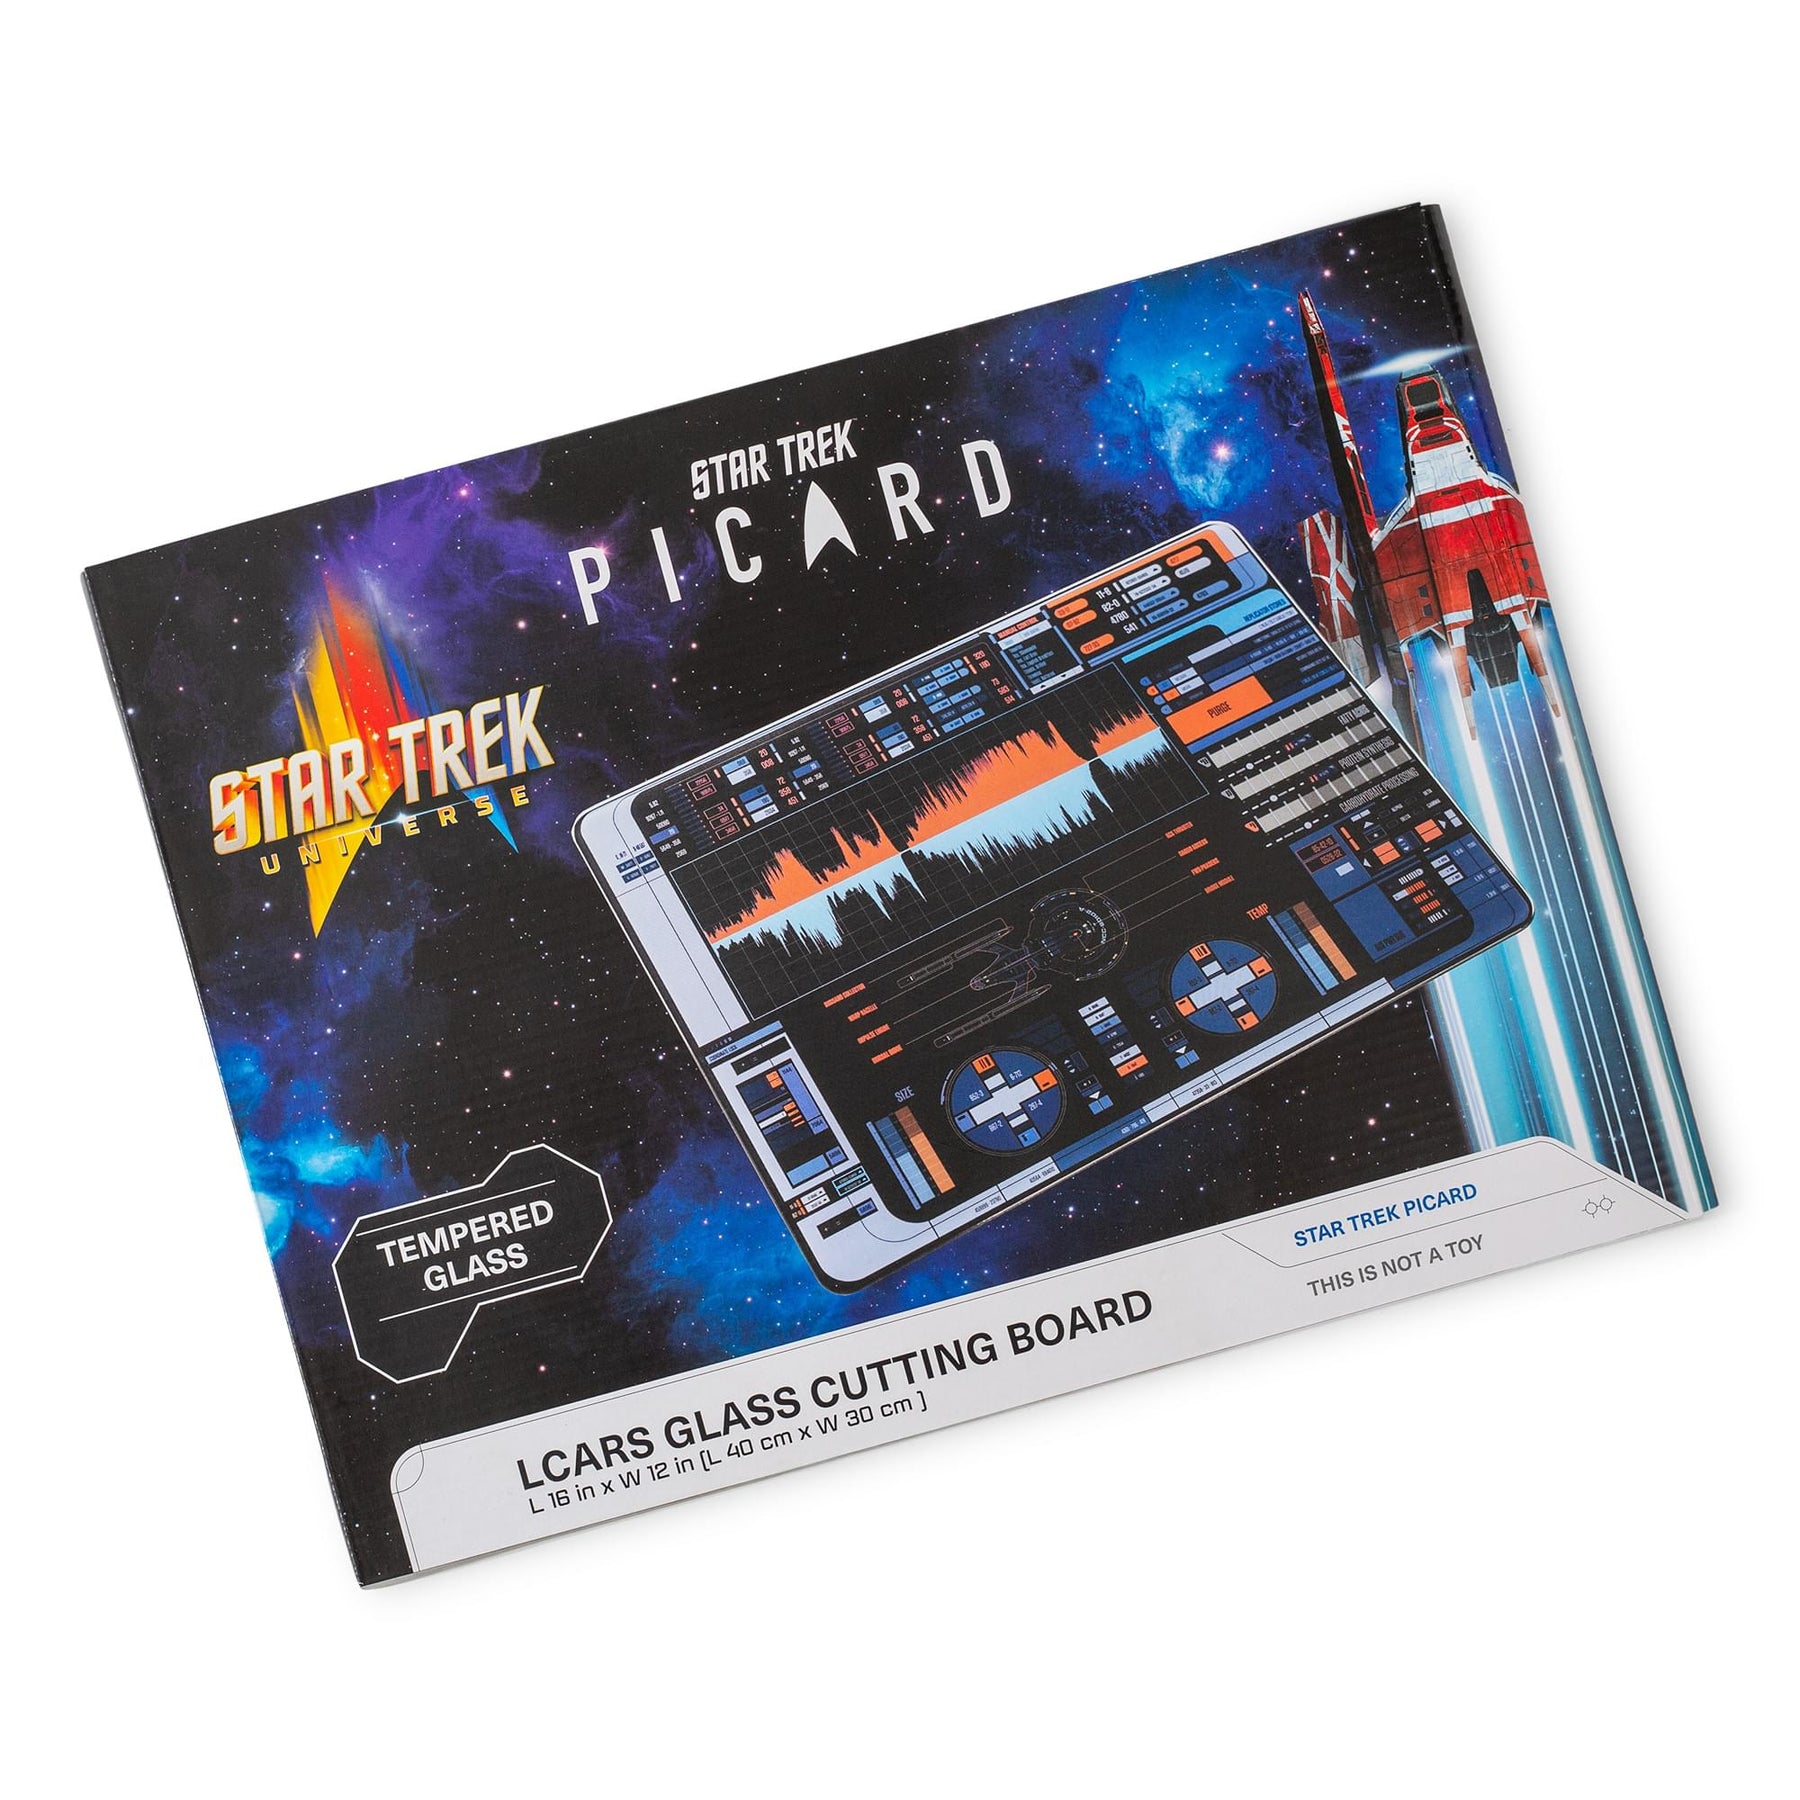 Star Trek: Picard LCARS Glass Cutting Board